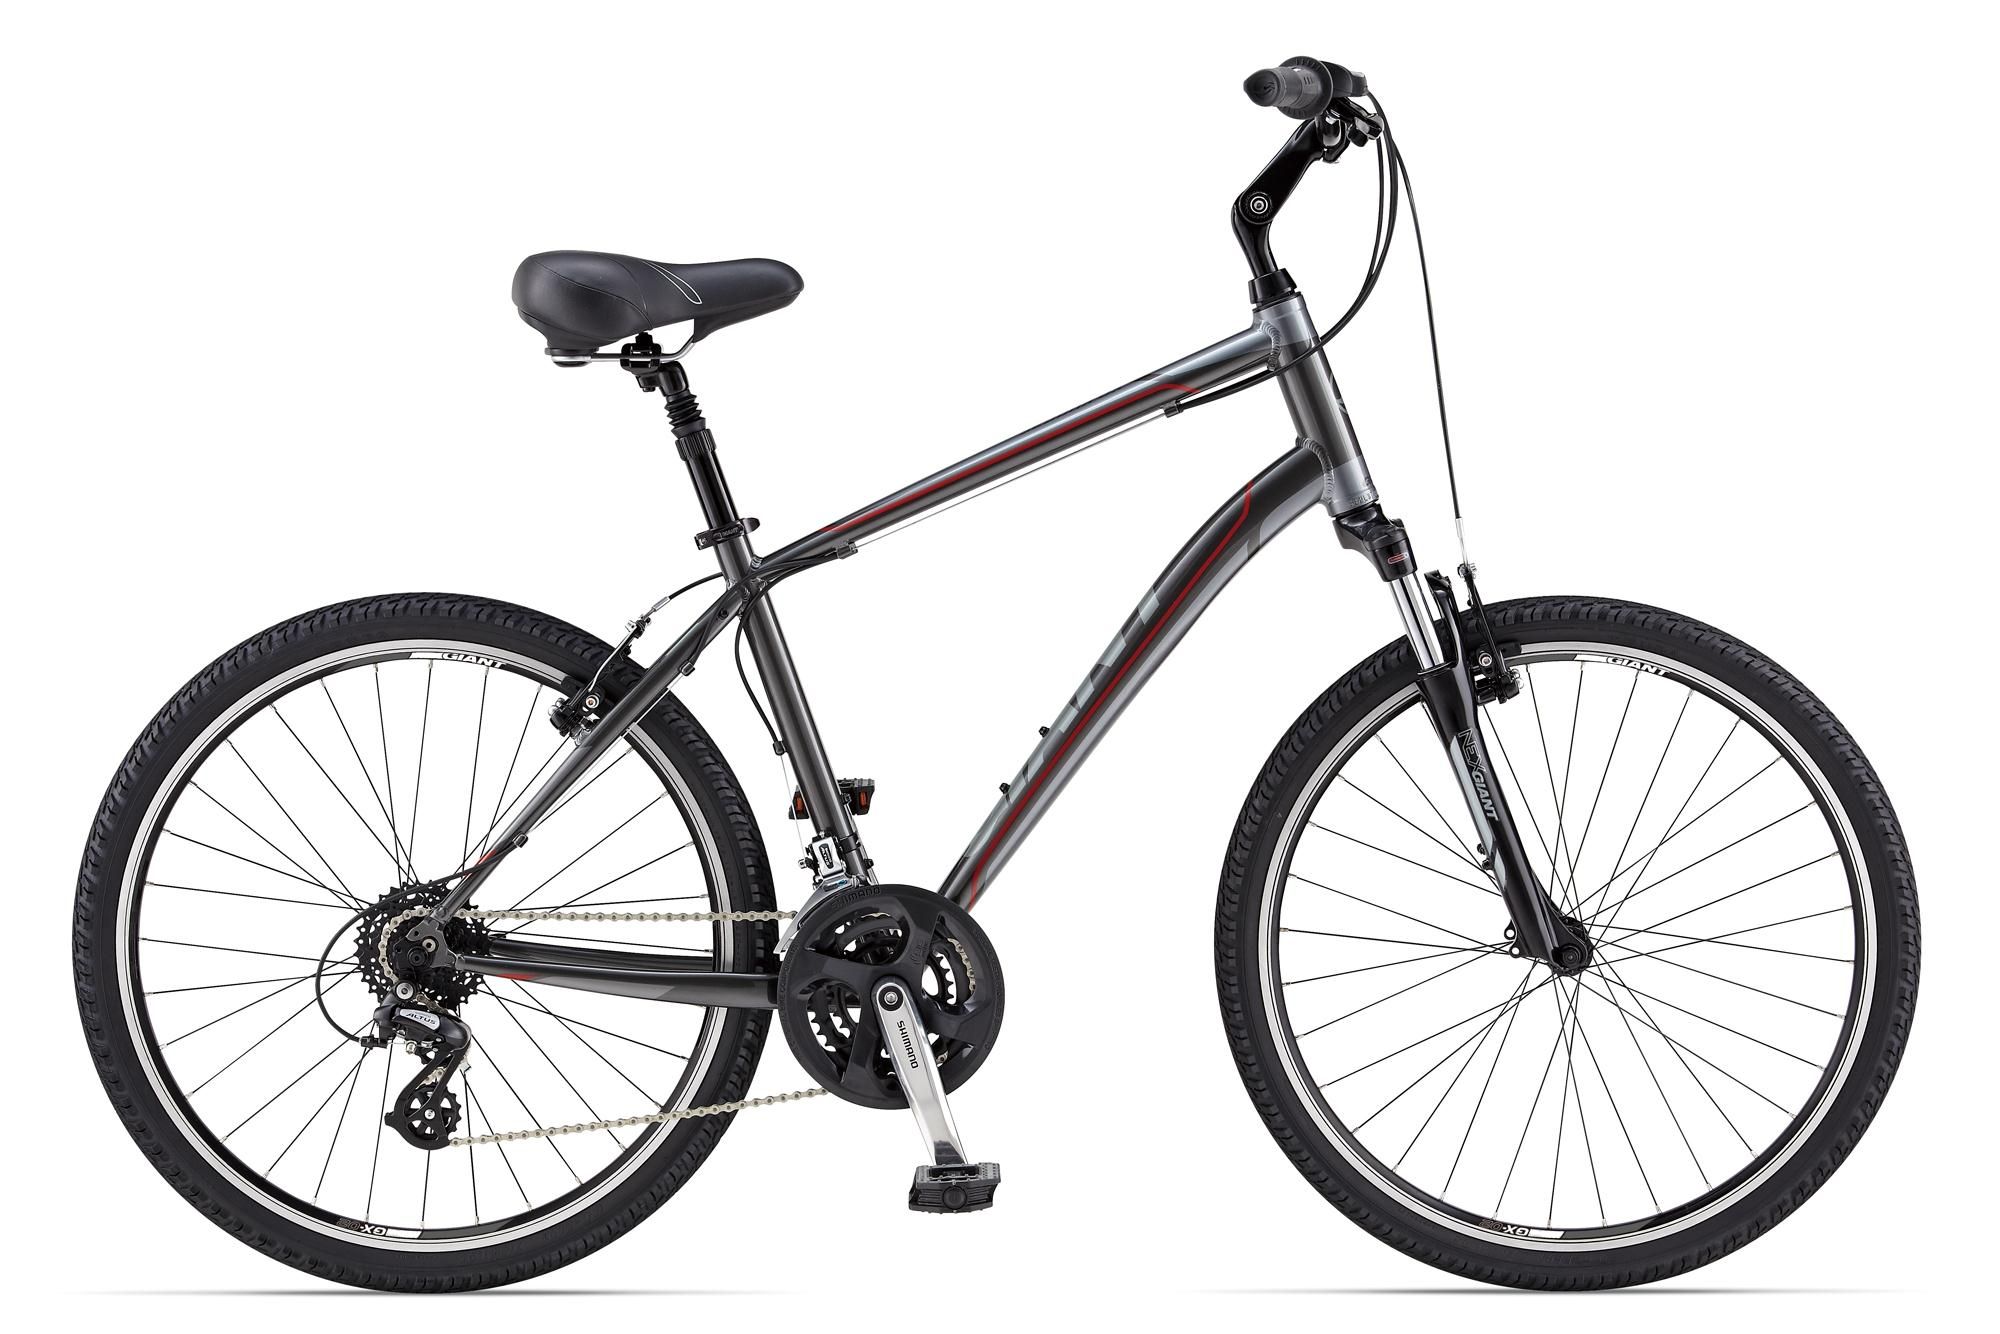  Отзывы о Велосипеде Giant Sedona DX 2014